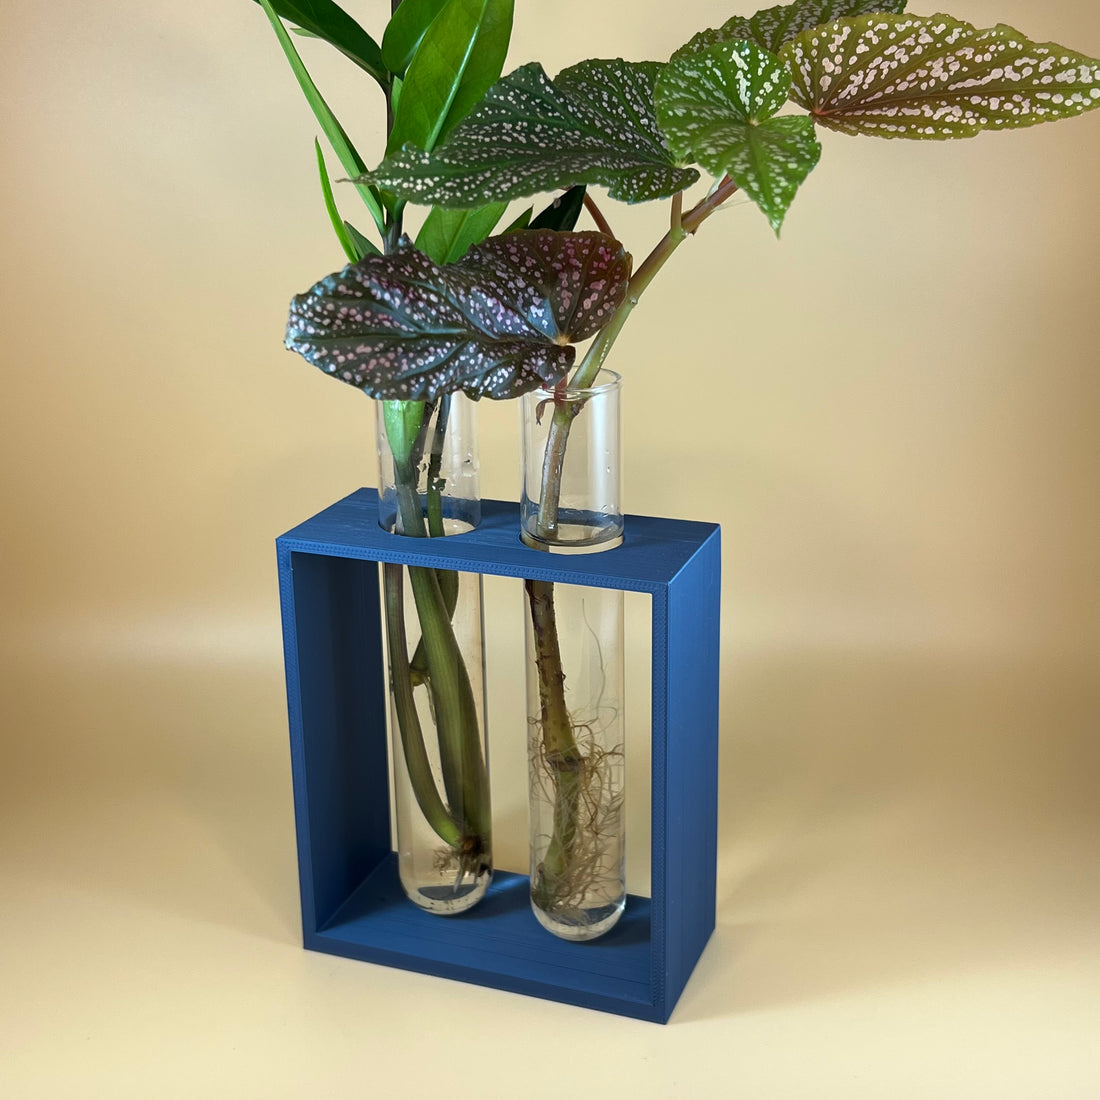 3D Printed Propagation Station - Hive Plants - 